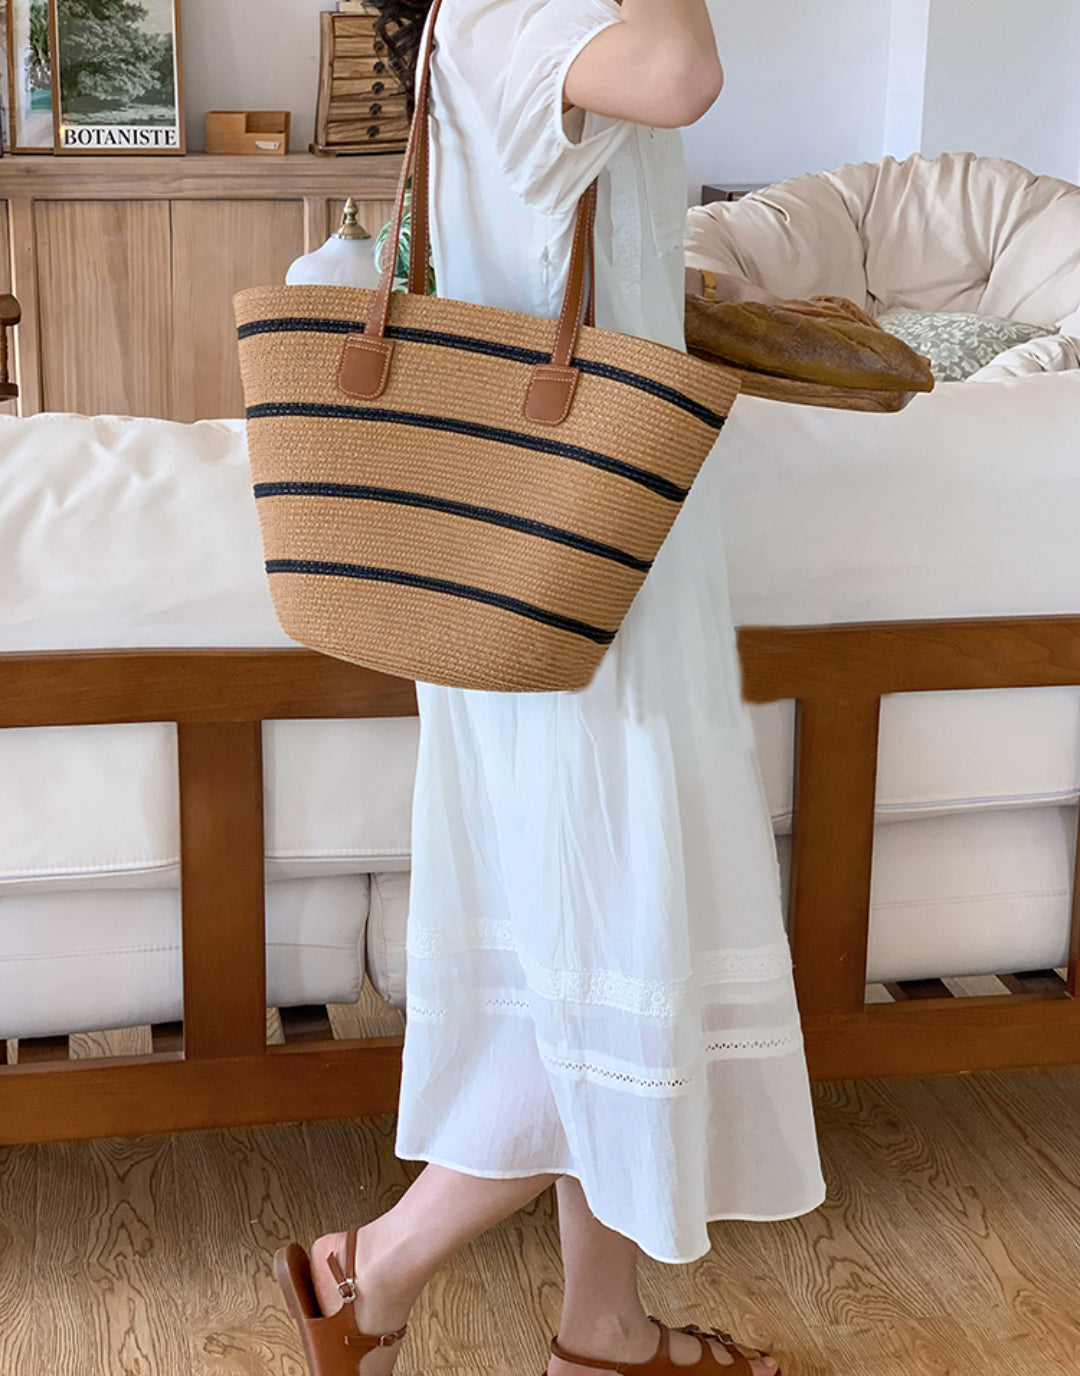 Straw Beach Bags Tote Bag&Summer Handwoven Shoulder Bags